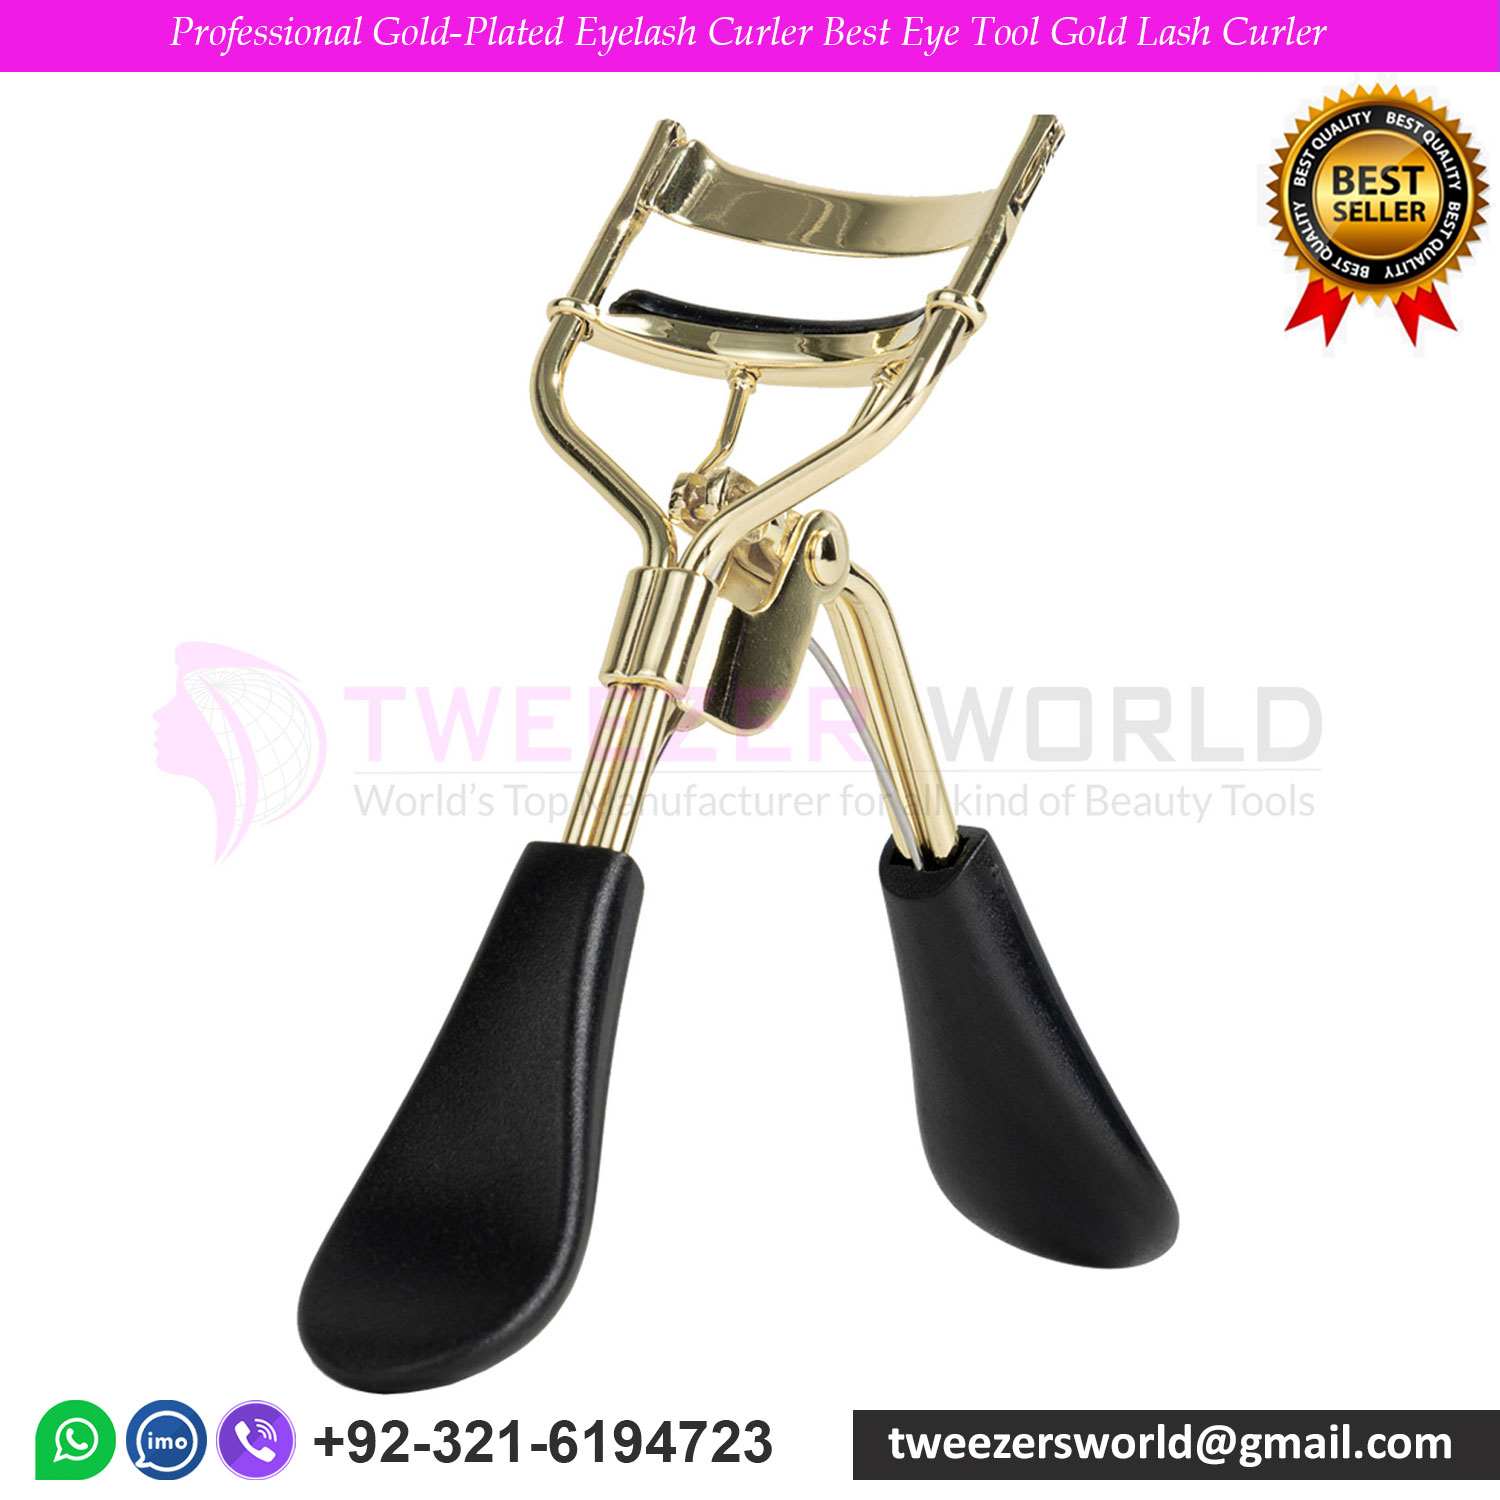 Professional Gold-Plated Eyelash Curler Best Eye Tool Gold Lash Curler